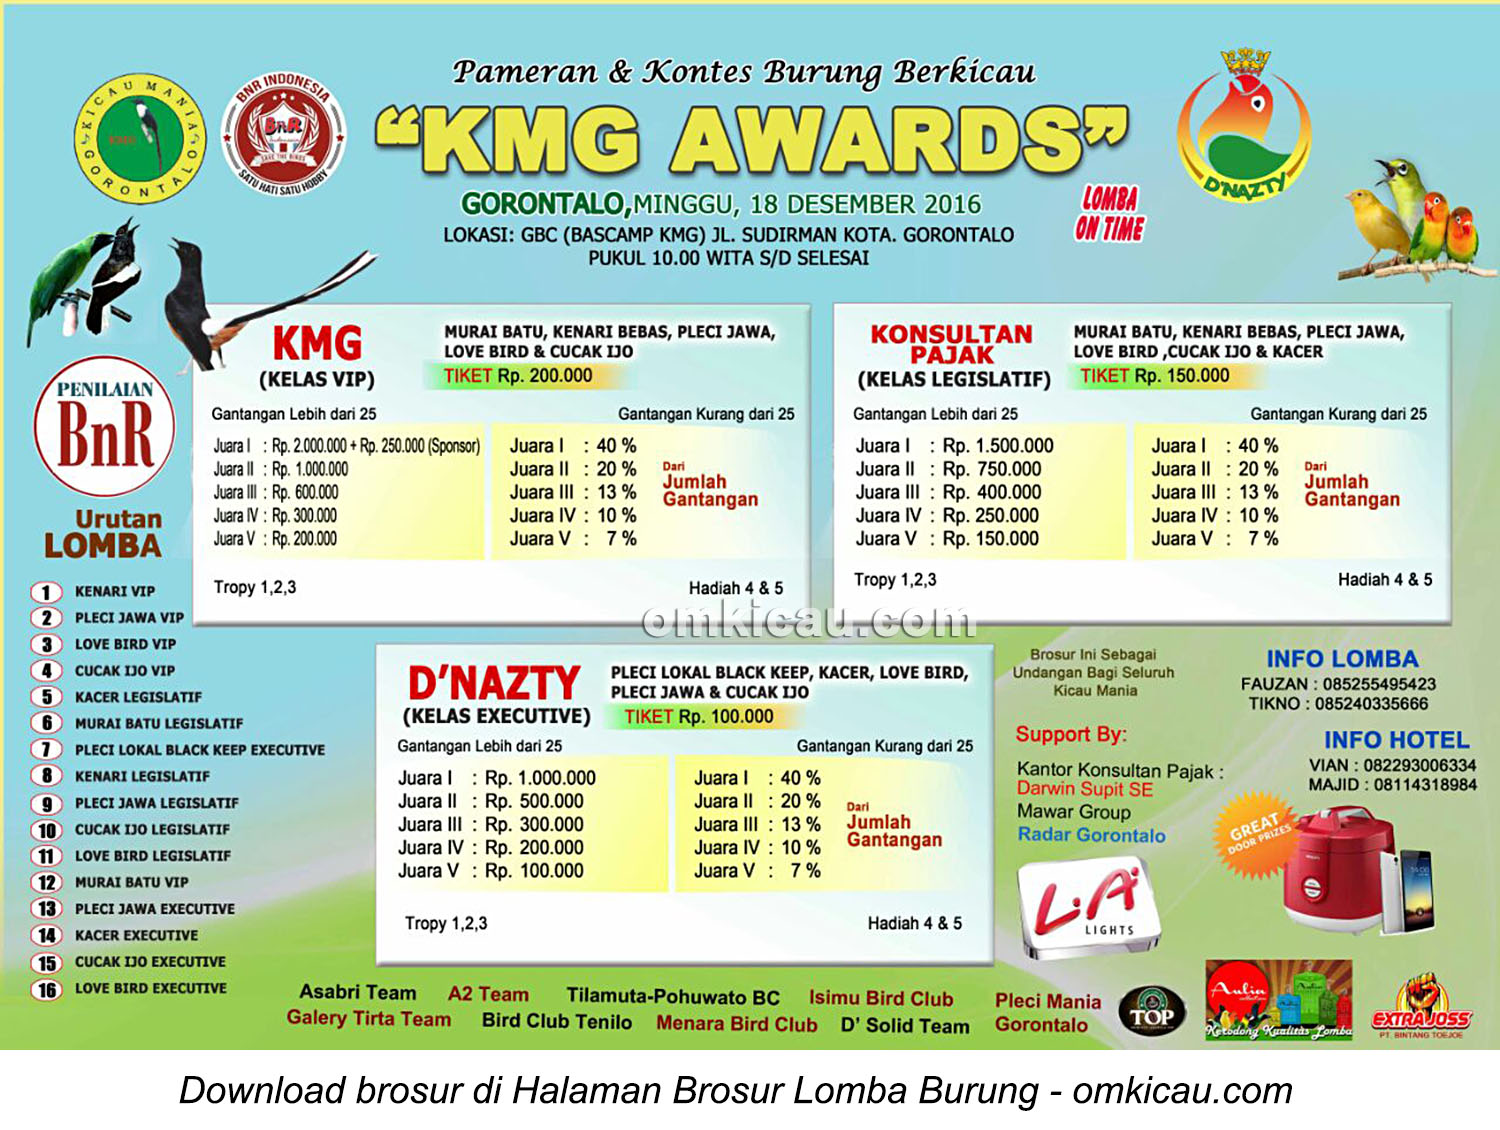 Brosur Lomba Burung Berkicau KMG Awards, Gorontalo, 18 Desember 2016